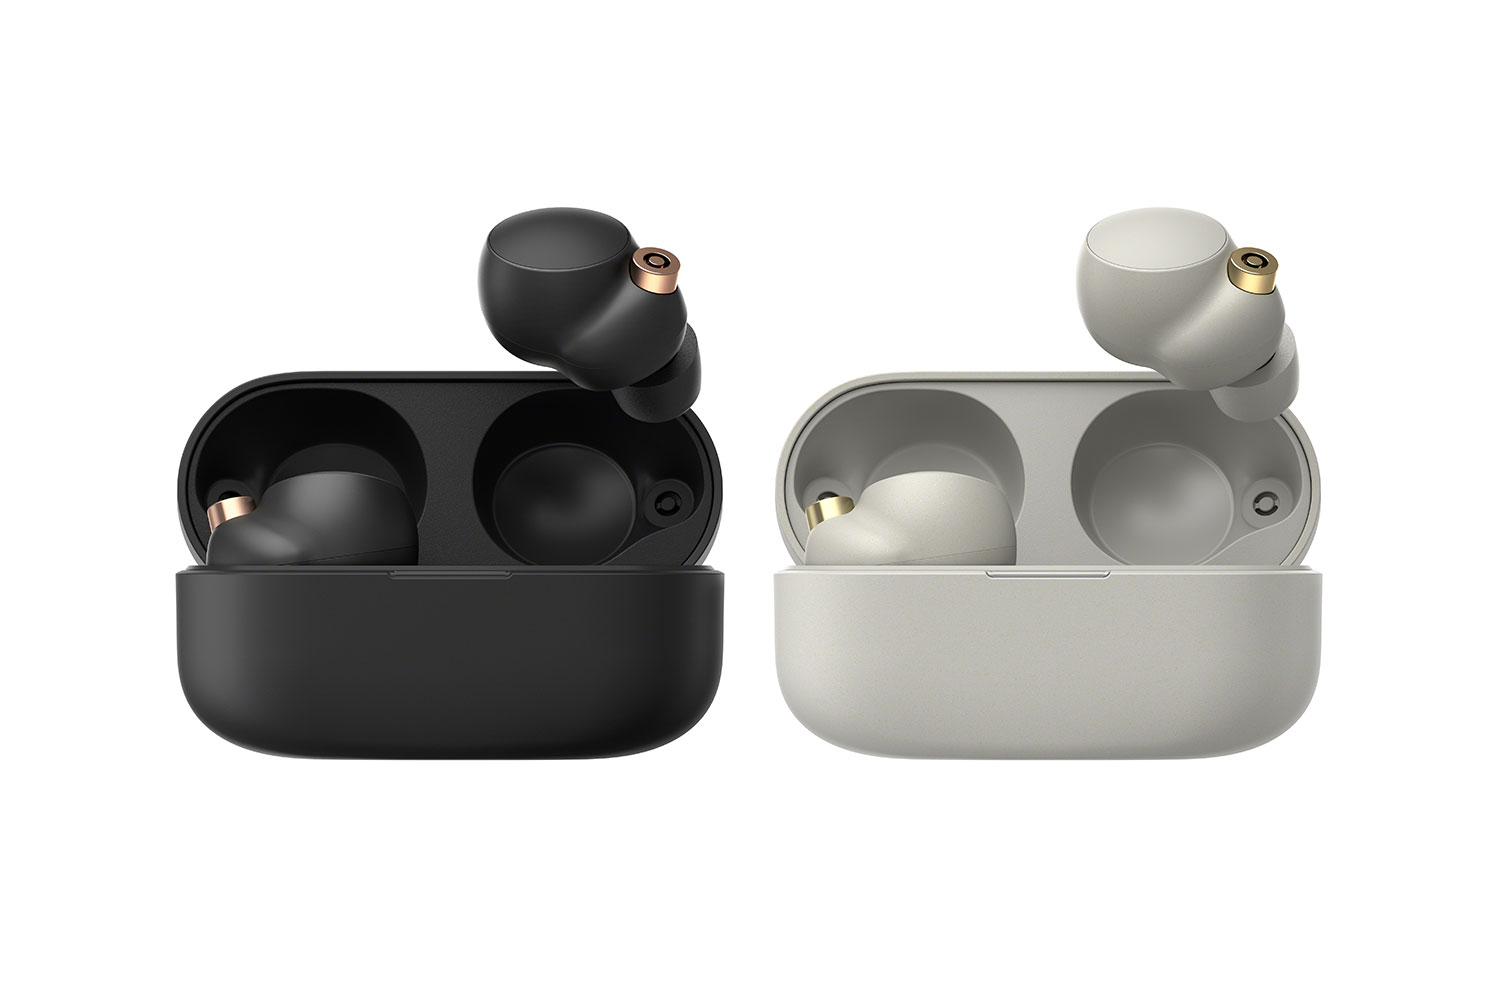 Sony Announces WF-1000XM4 Truly Wireless Headphones